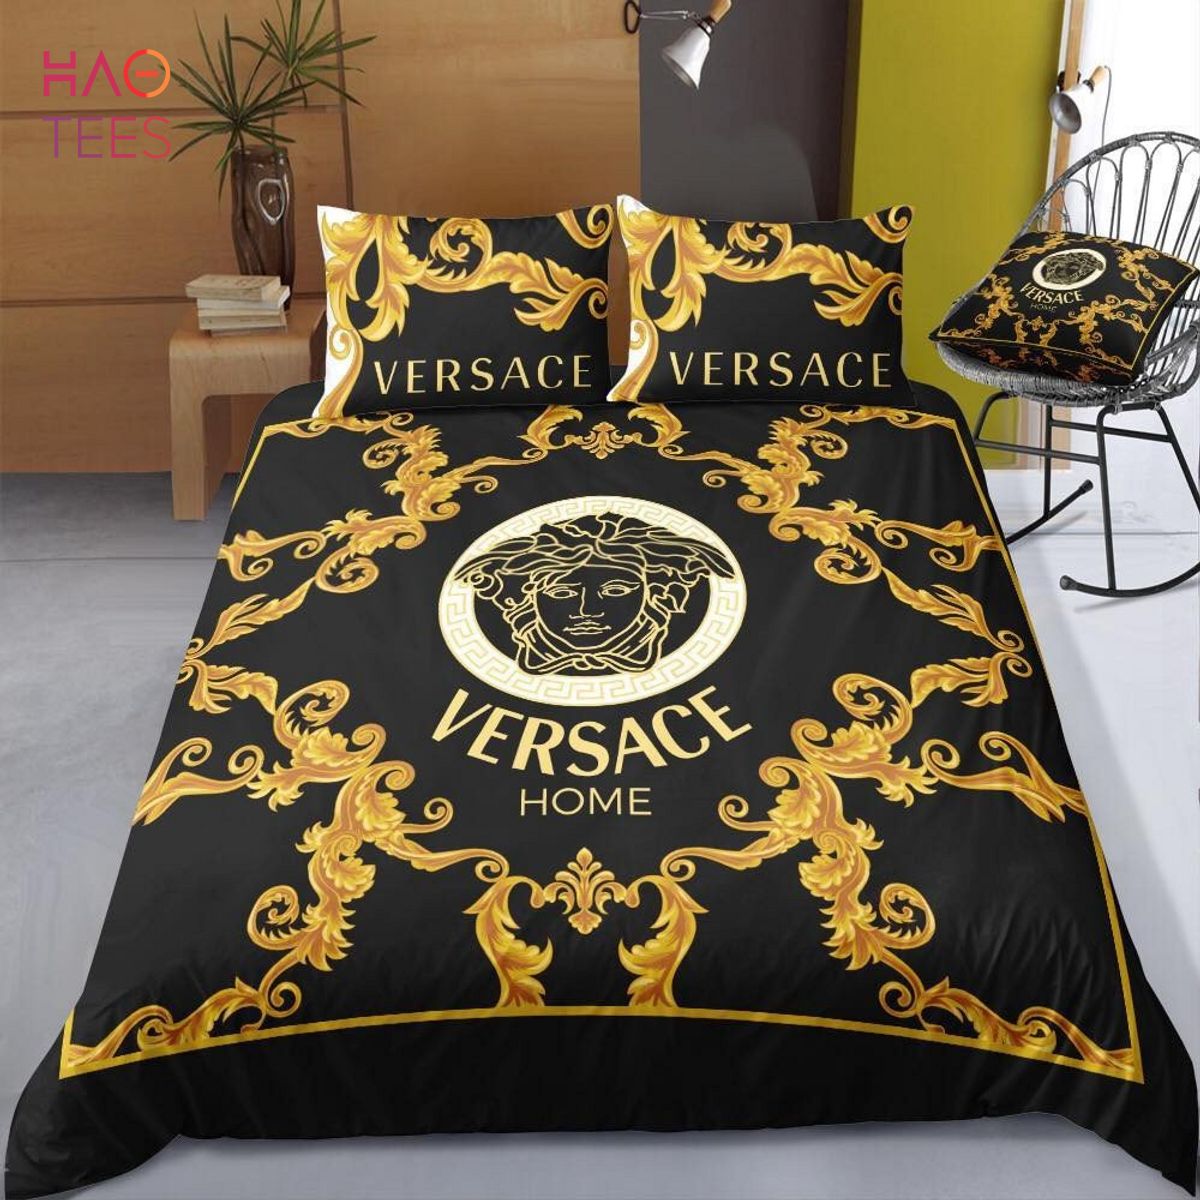 Versace Home Luxury Brand Bedding Sets POD Design